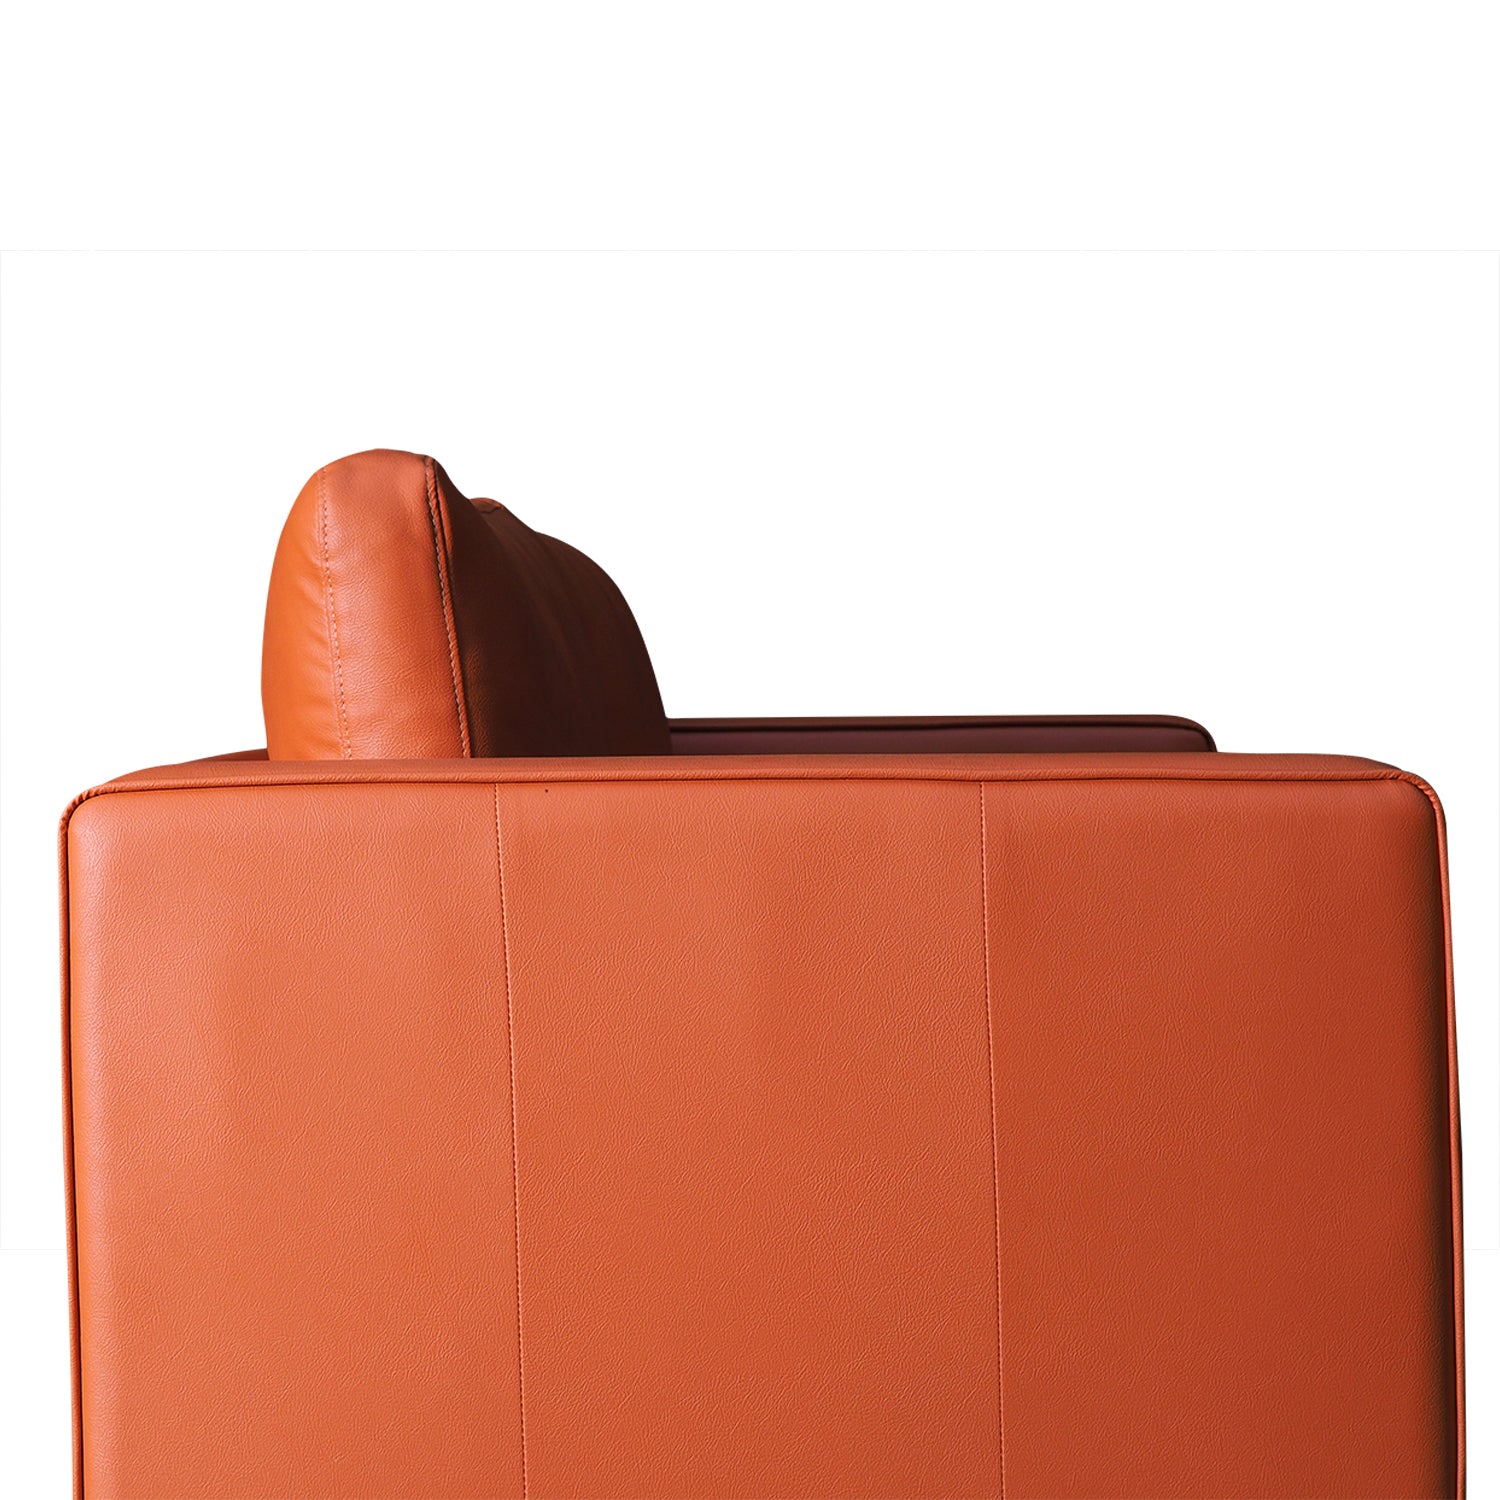 Gabi Sofa Orange Leather